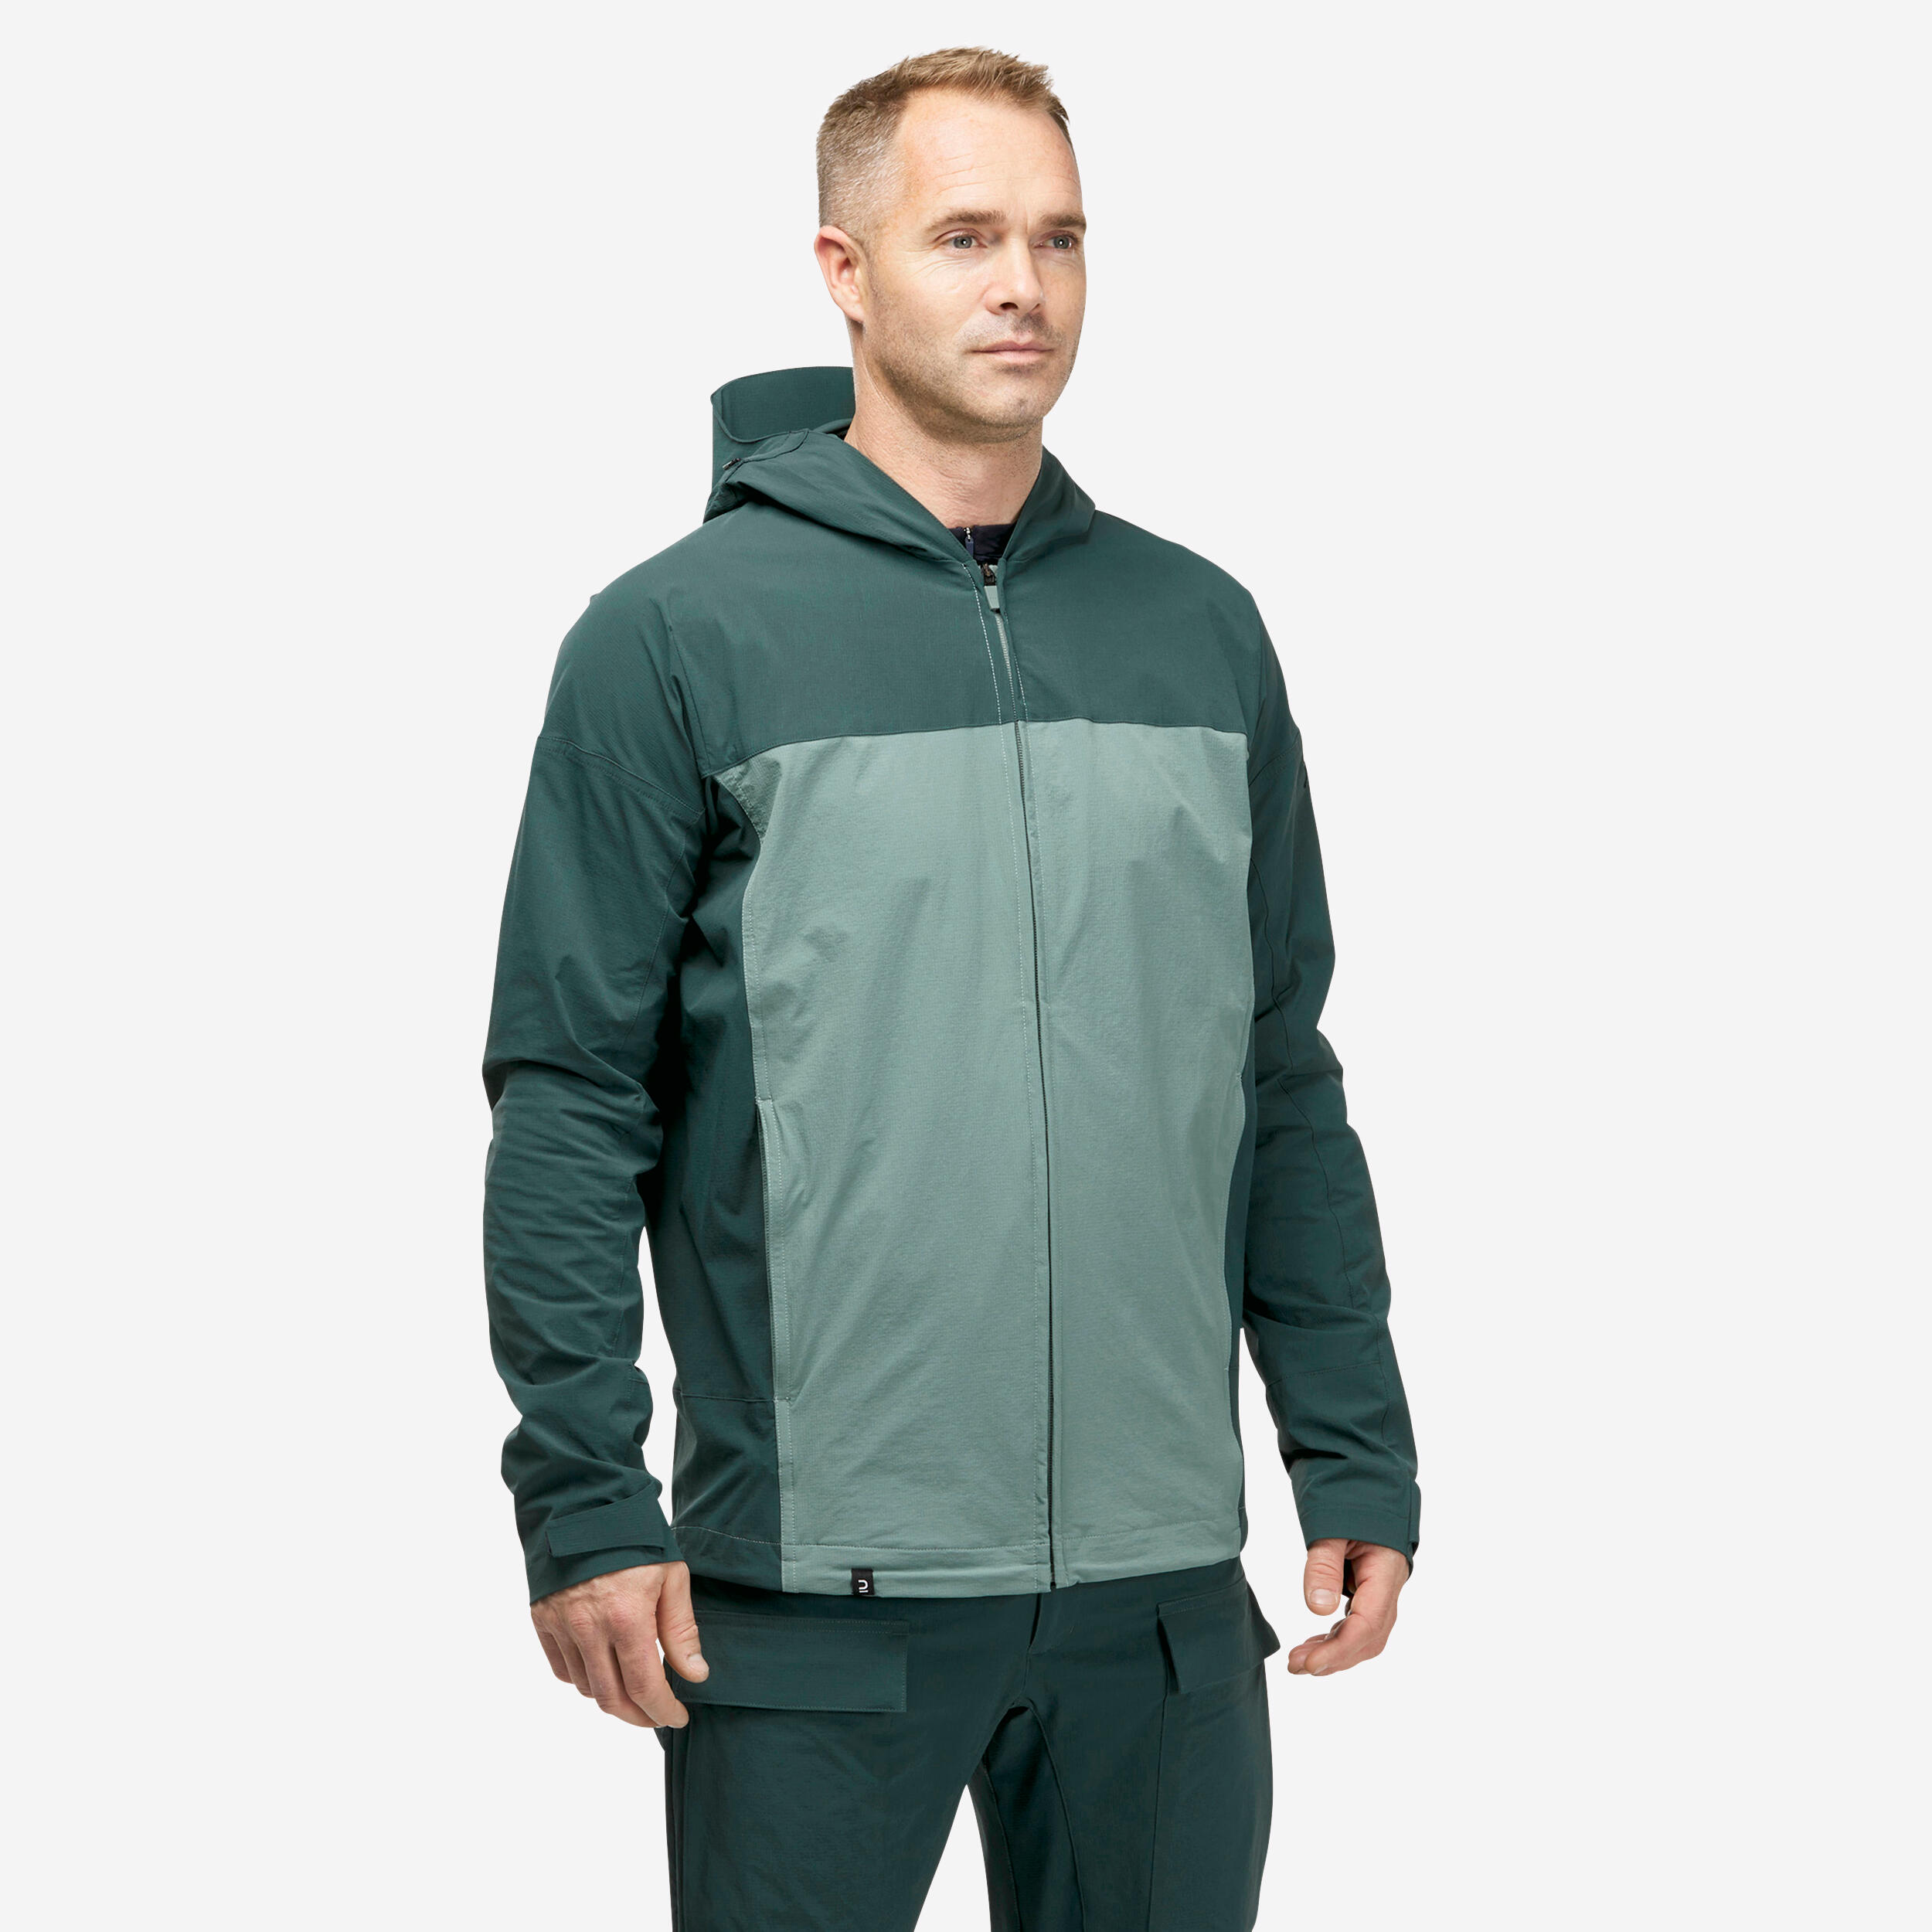 Unisex anti-mosquito jacket - Tropic 900 - Green 1/16